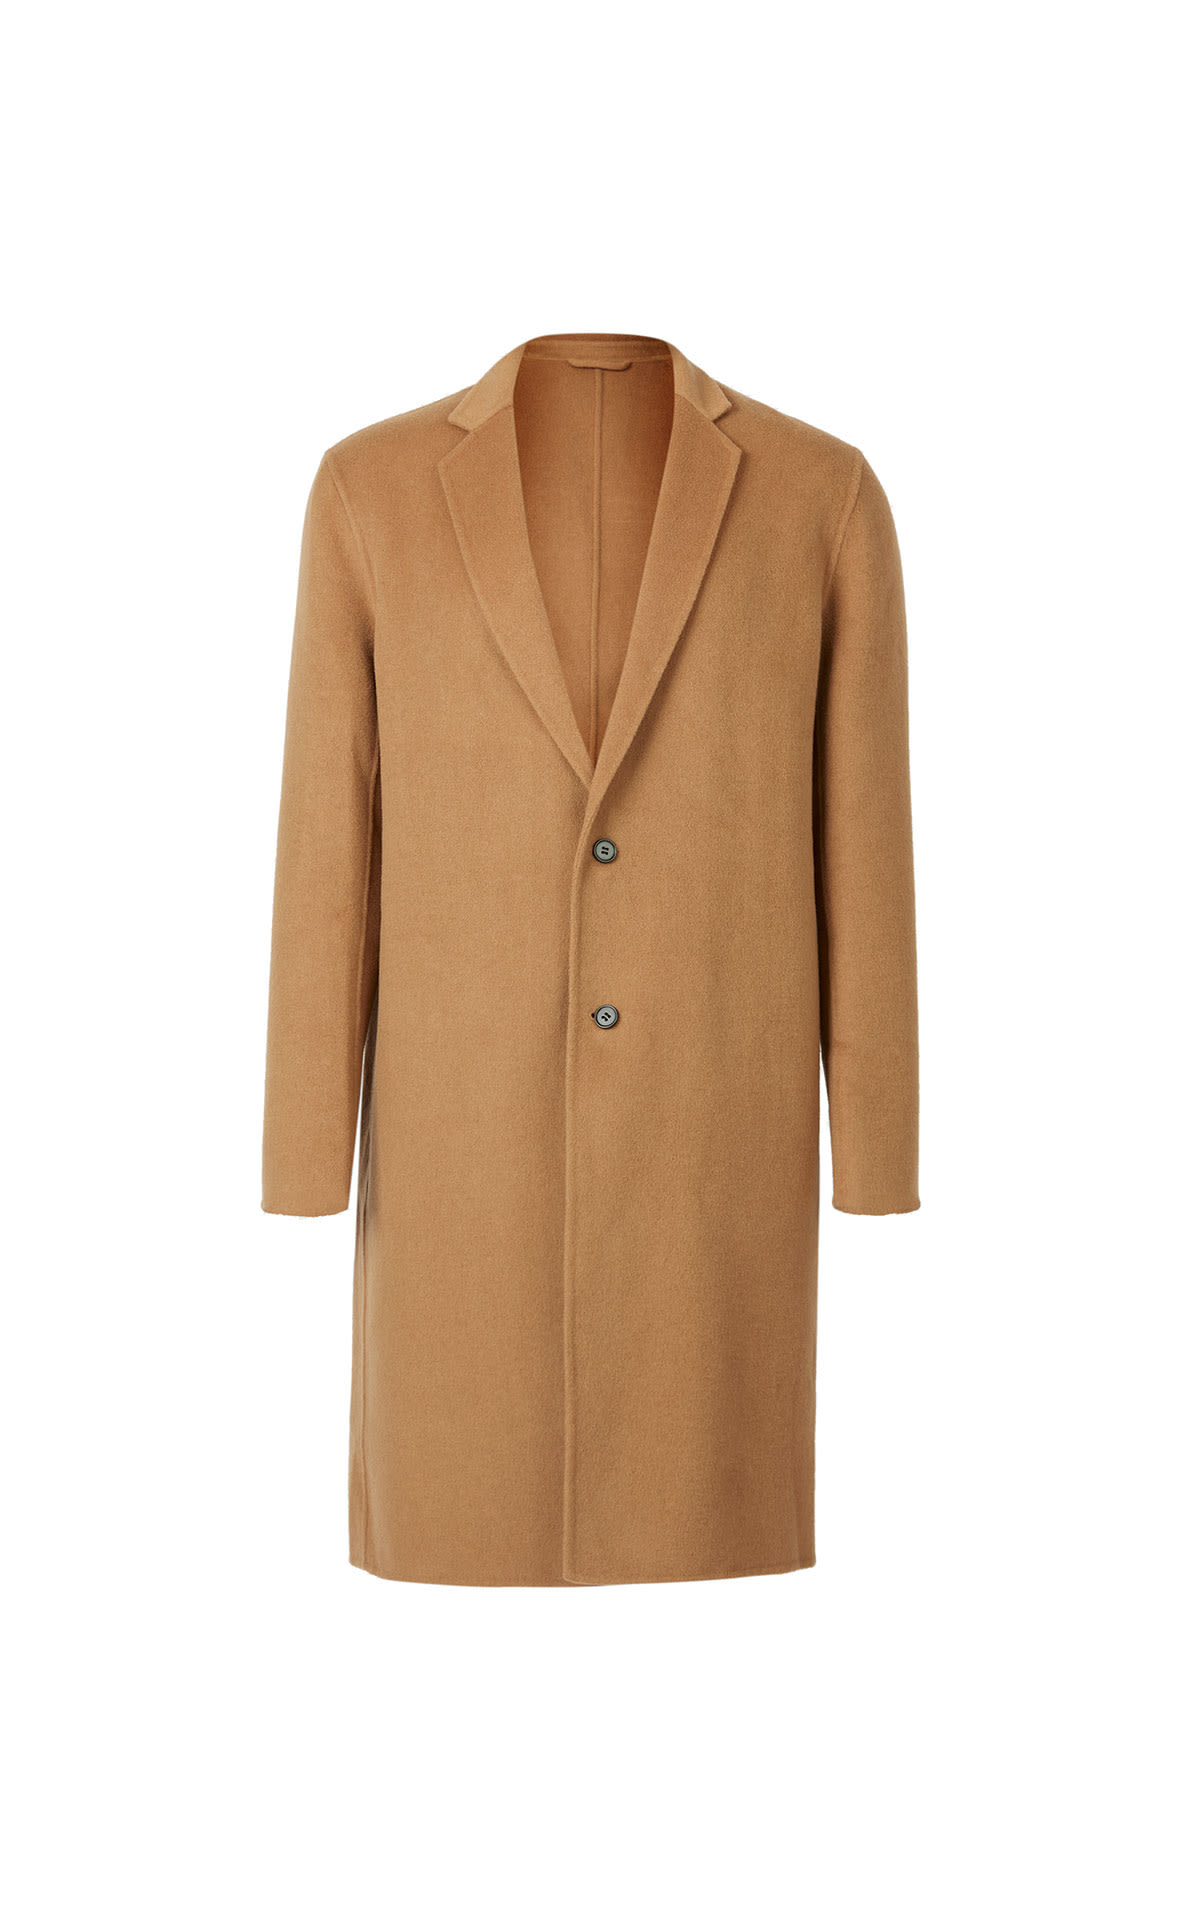 AllSaints Hanson coat from Bicester Village